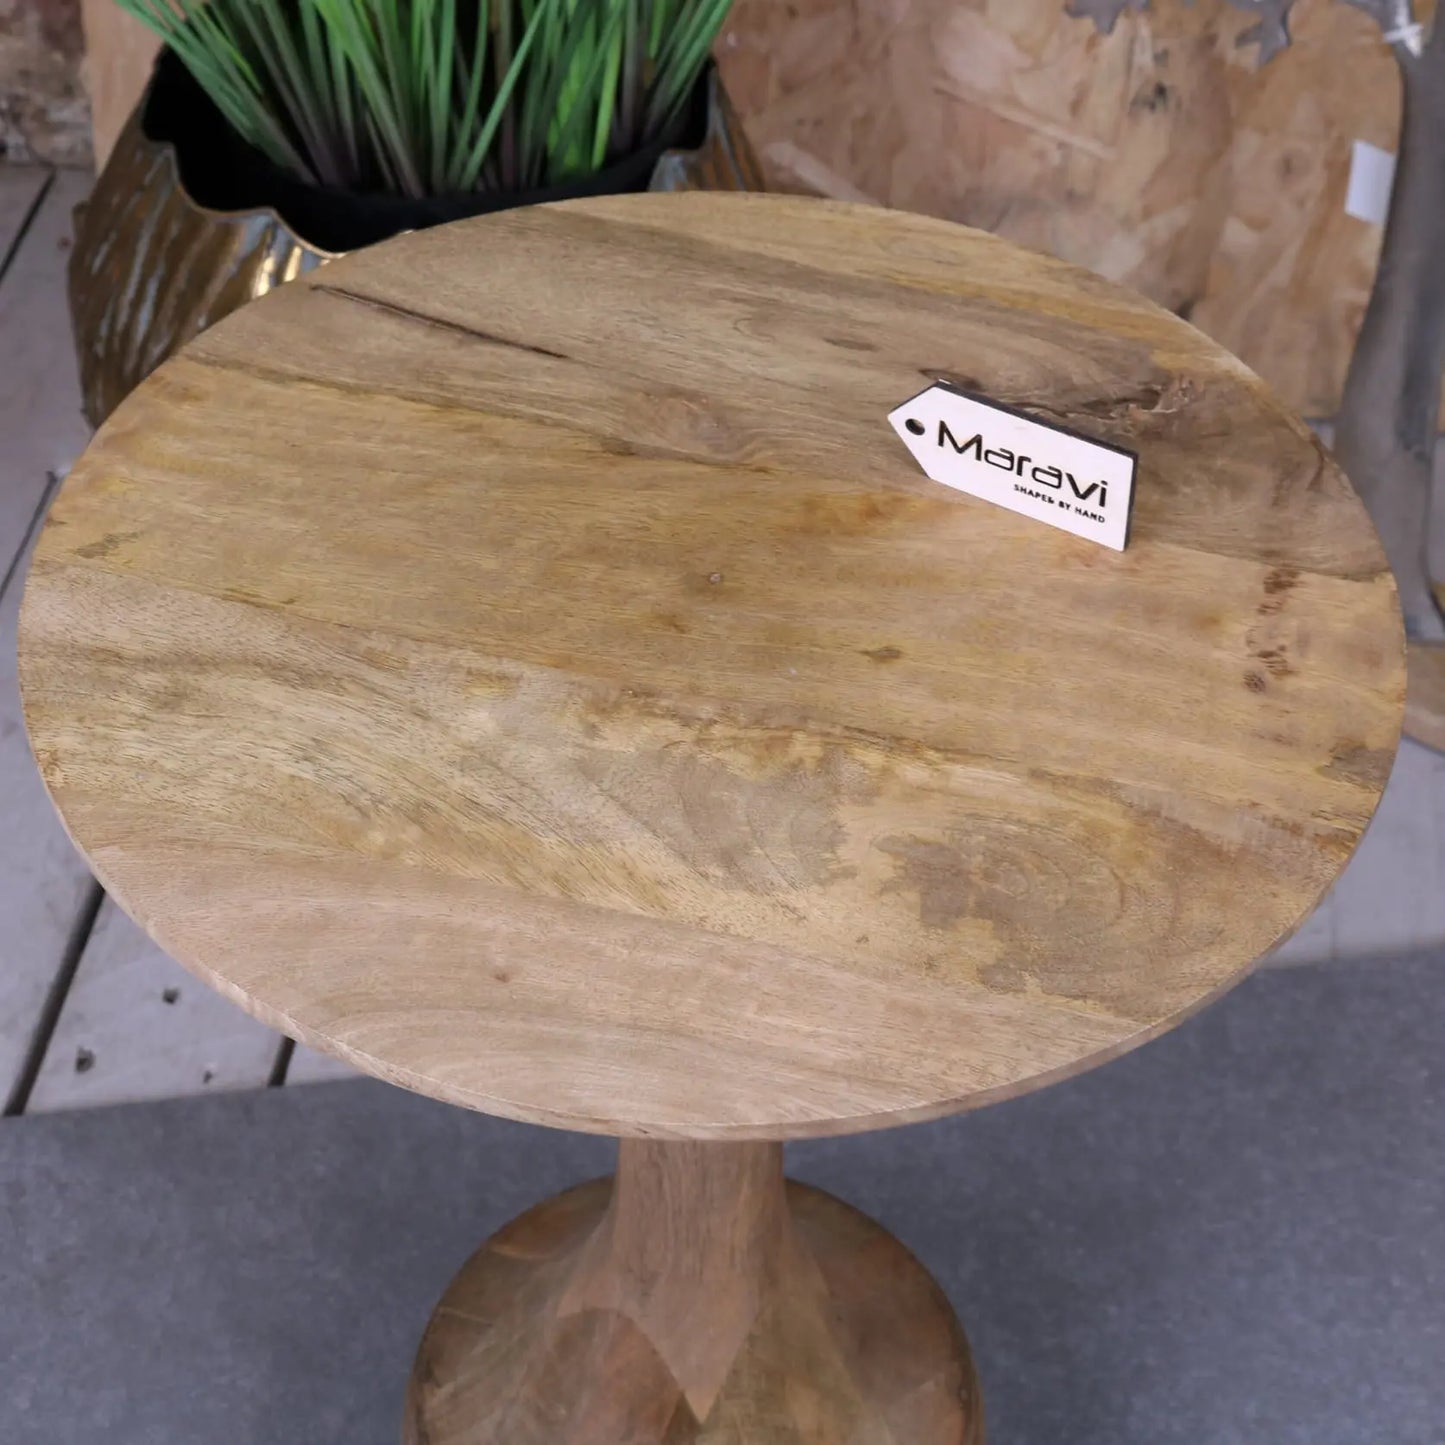 Majuli Mango Wood Small Side Table - Angled Top View